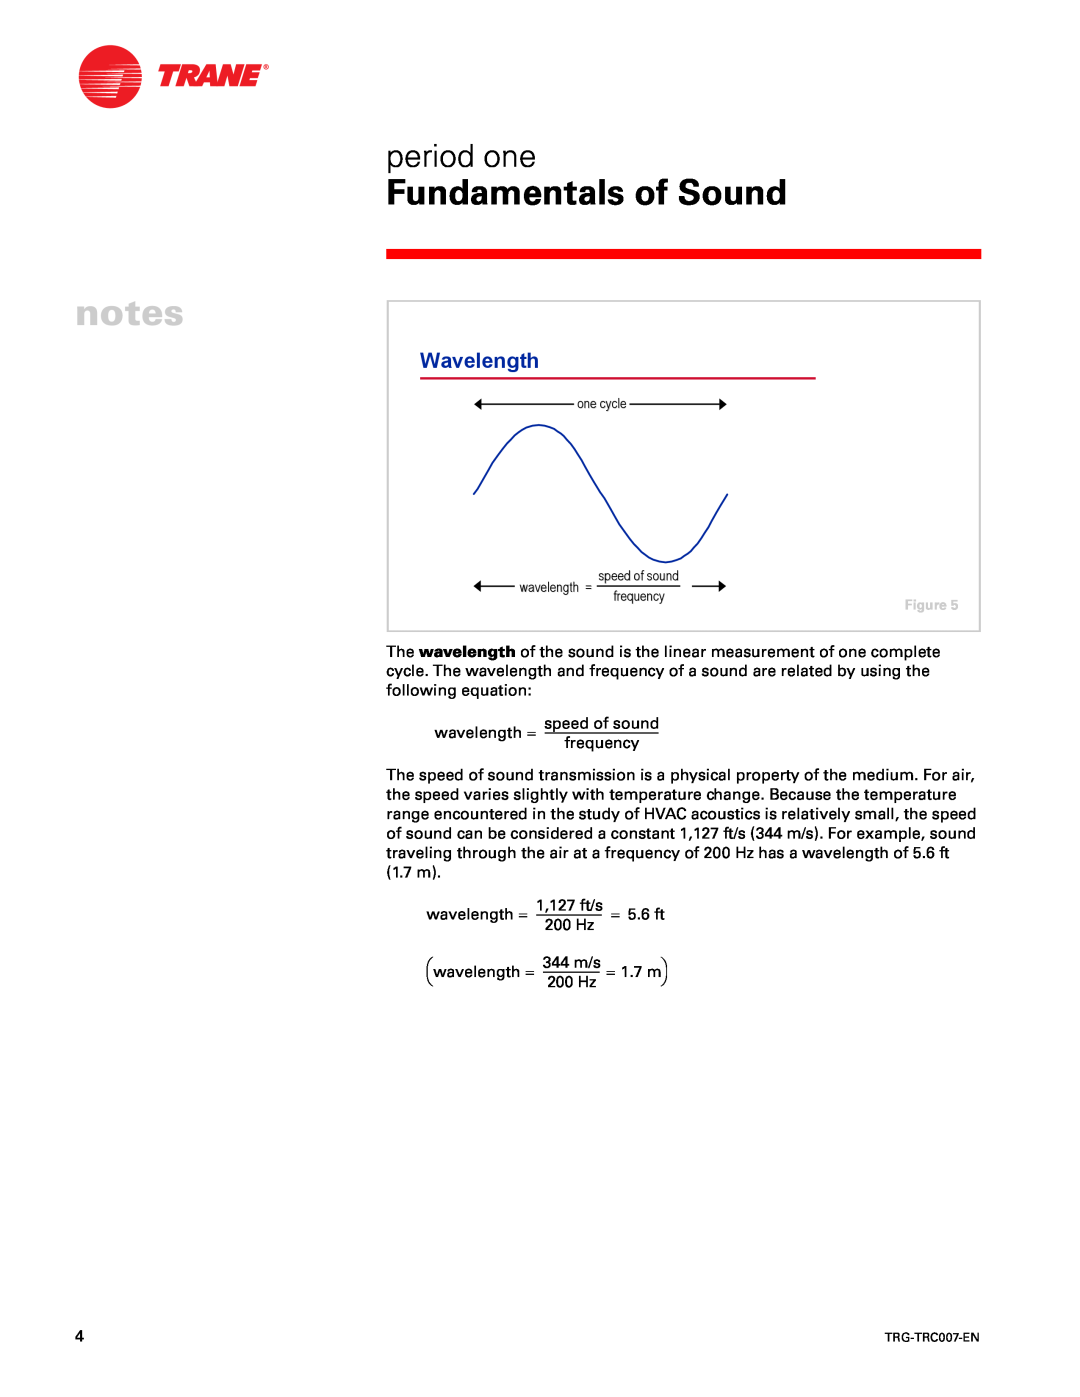 Trane TRG-TRC007-EN manual Wavelength, Fundamentals of Sound, period one 